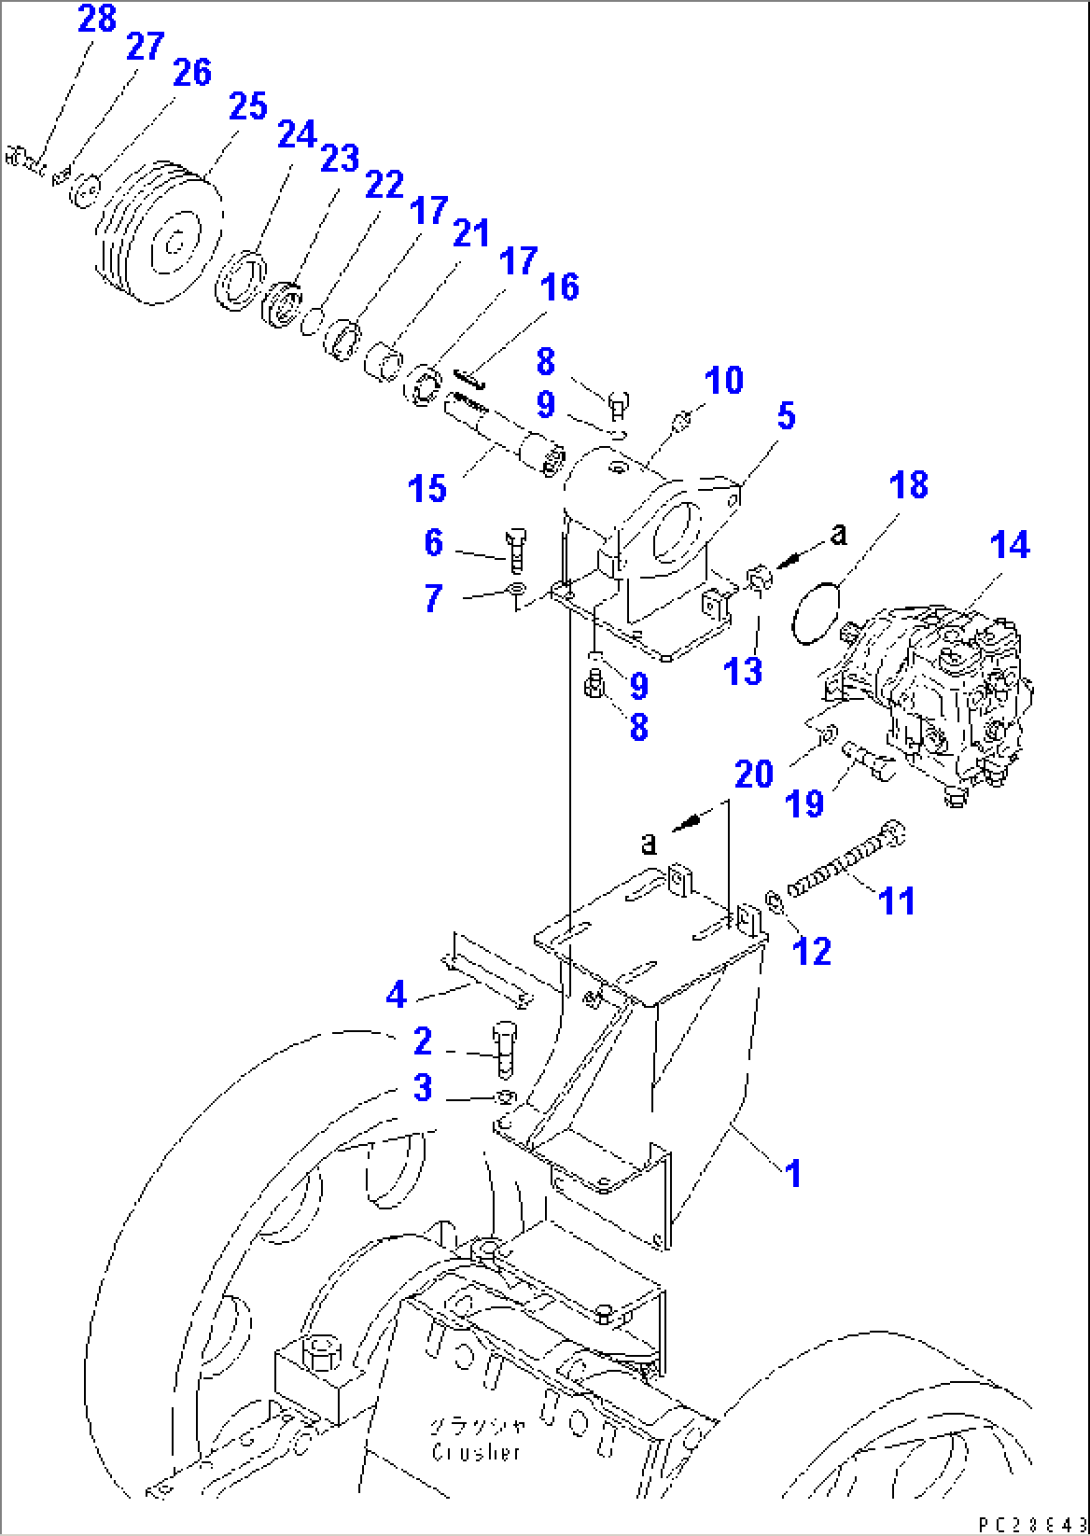 CRUSHER SYSTEM (1/3) (CRUSHER MOTOR)